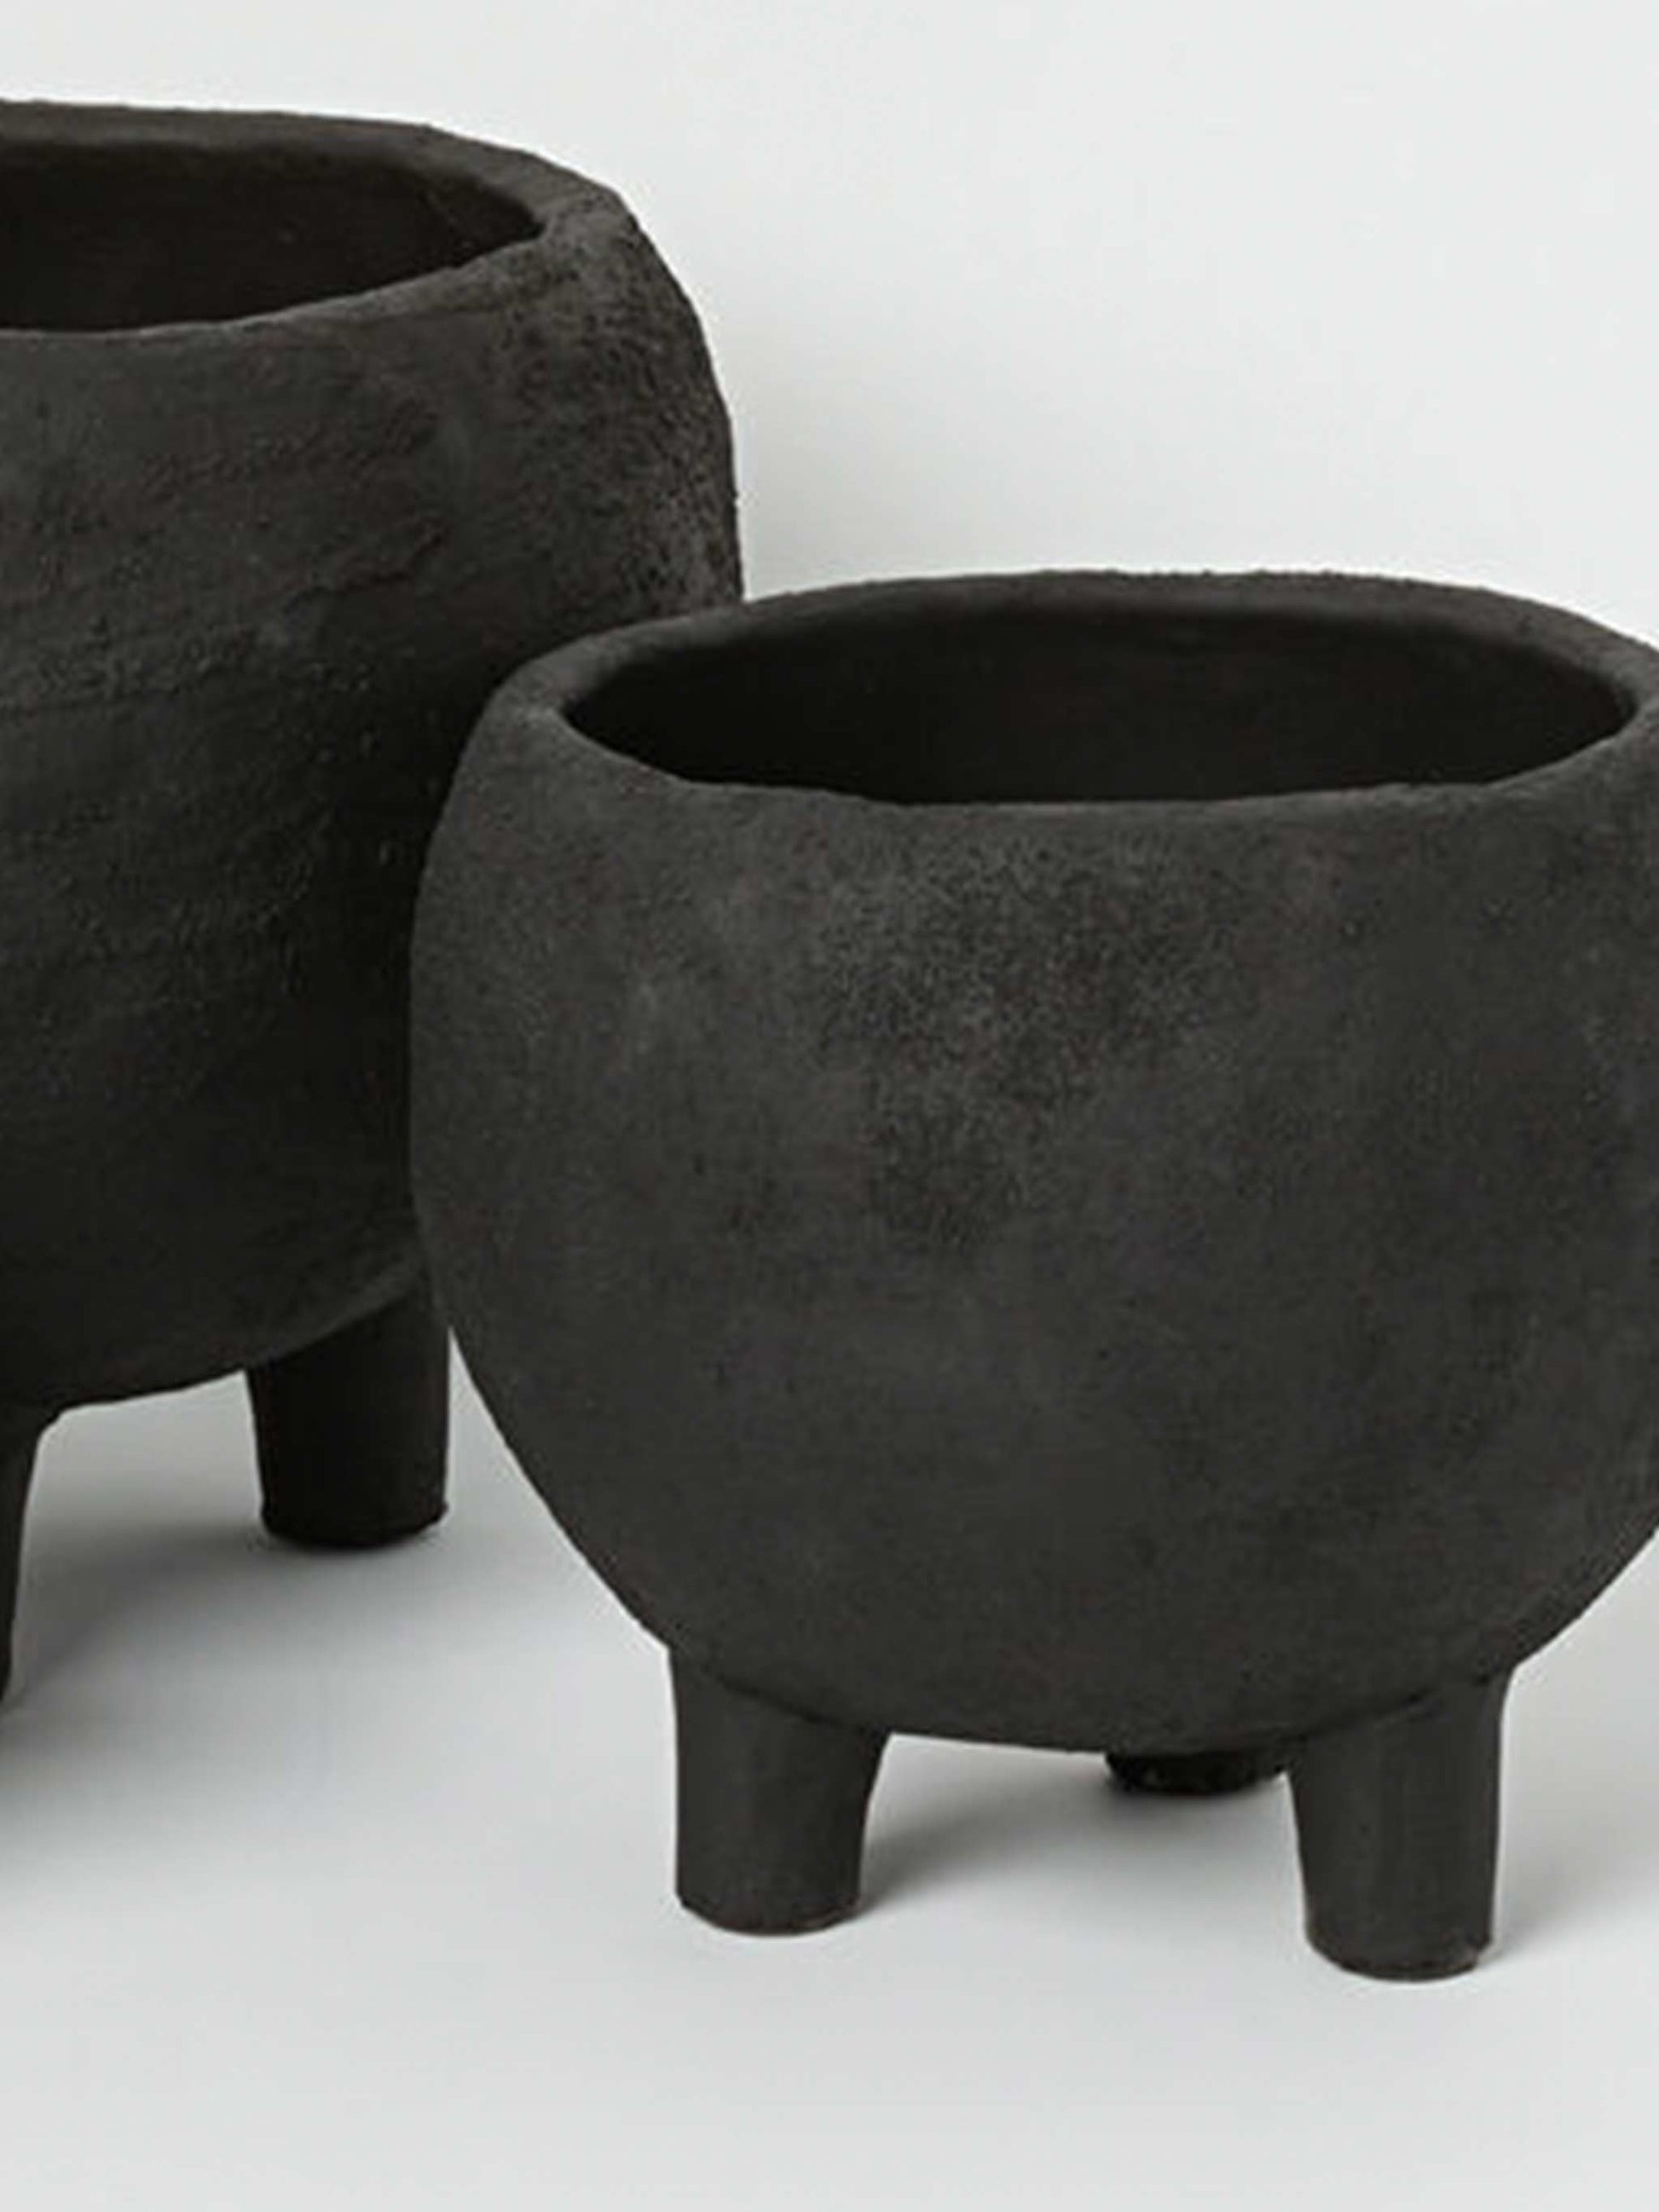 Textured Short Black Dome Pot with Standing Legs – Medium